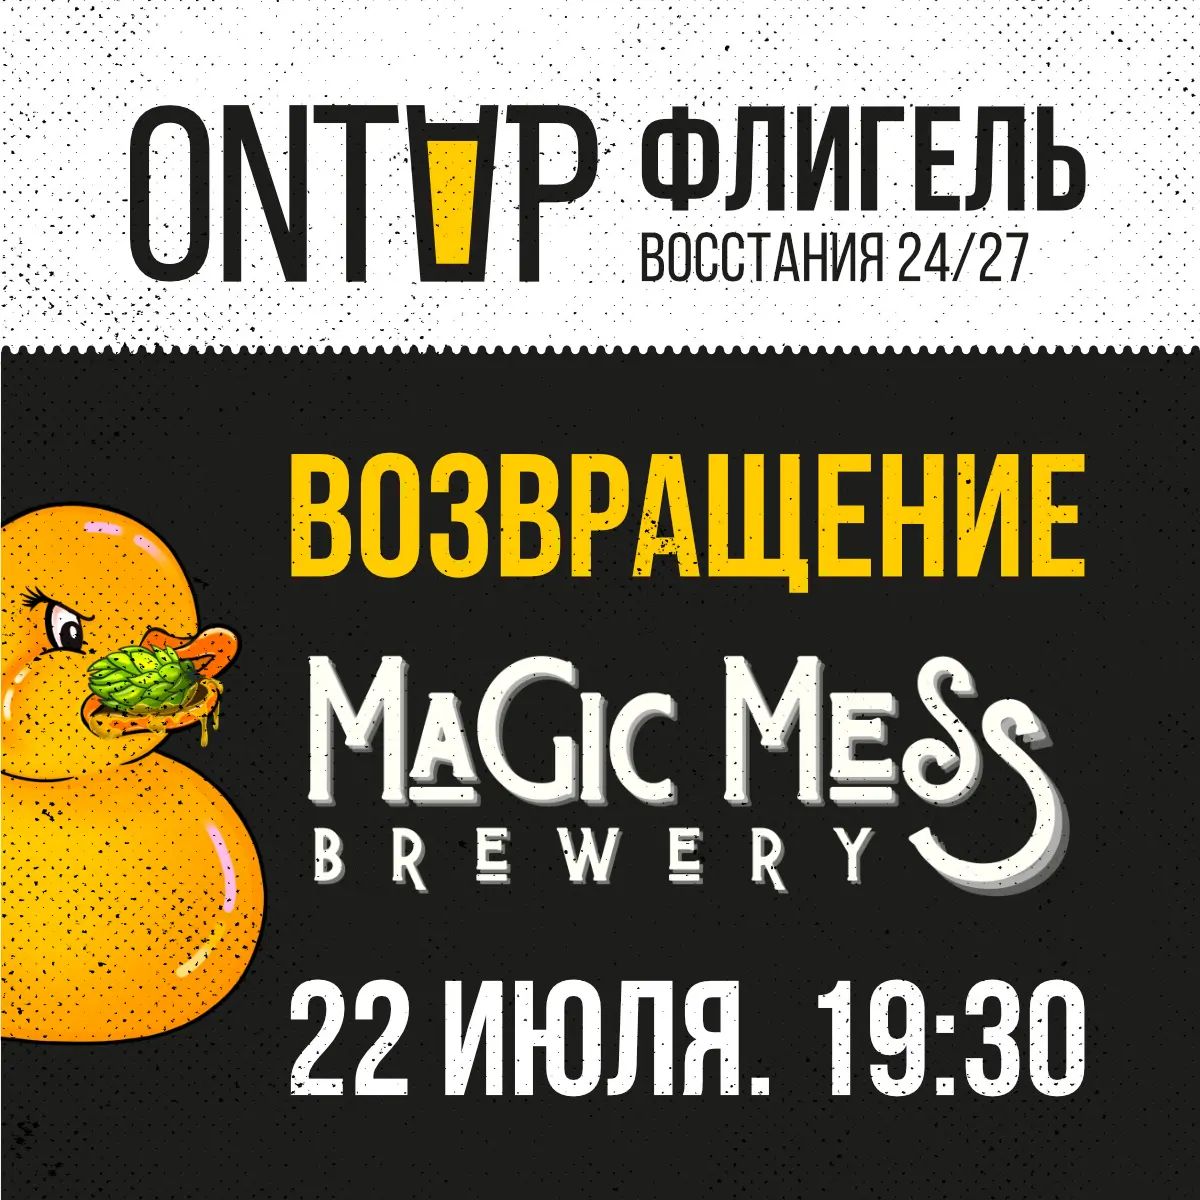 Magic mess пиво. Magic mess Brewery пиво. Пивоварня Magic mess logo. Magic mess Brewery логотип.